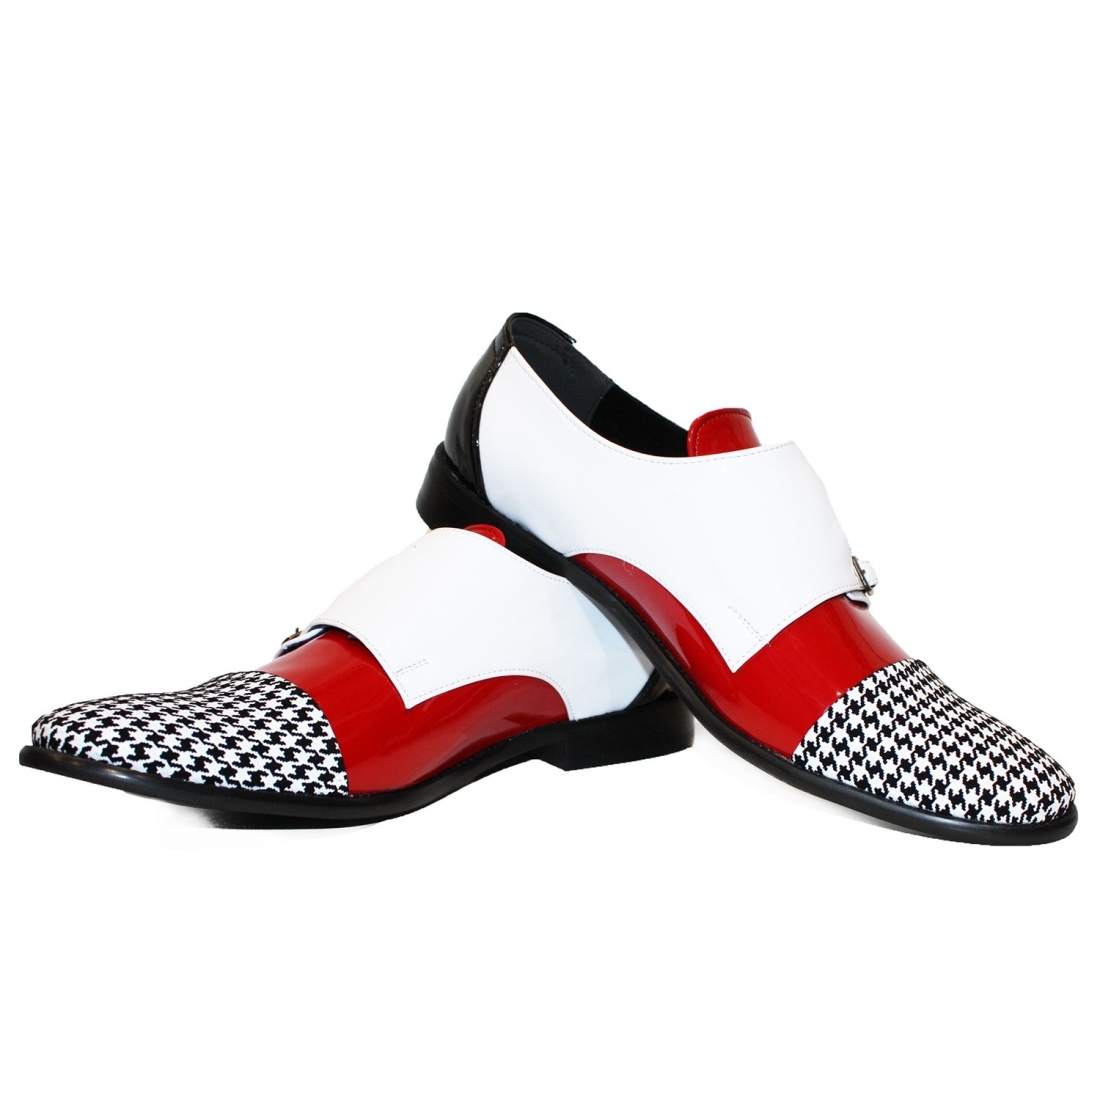 Modello Typaga - Monk Shoes - Handmade Colorful Italian Leather Shoes